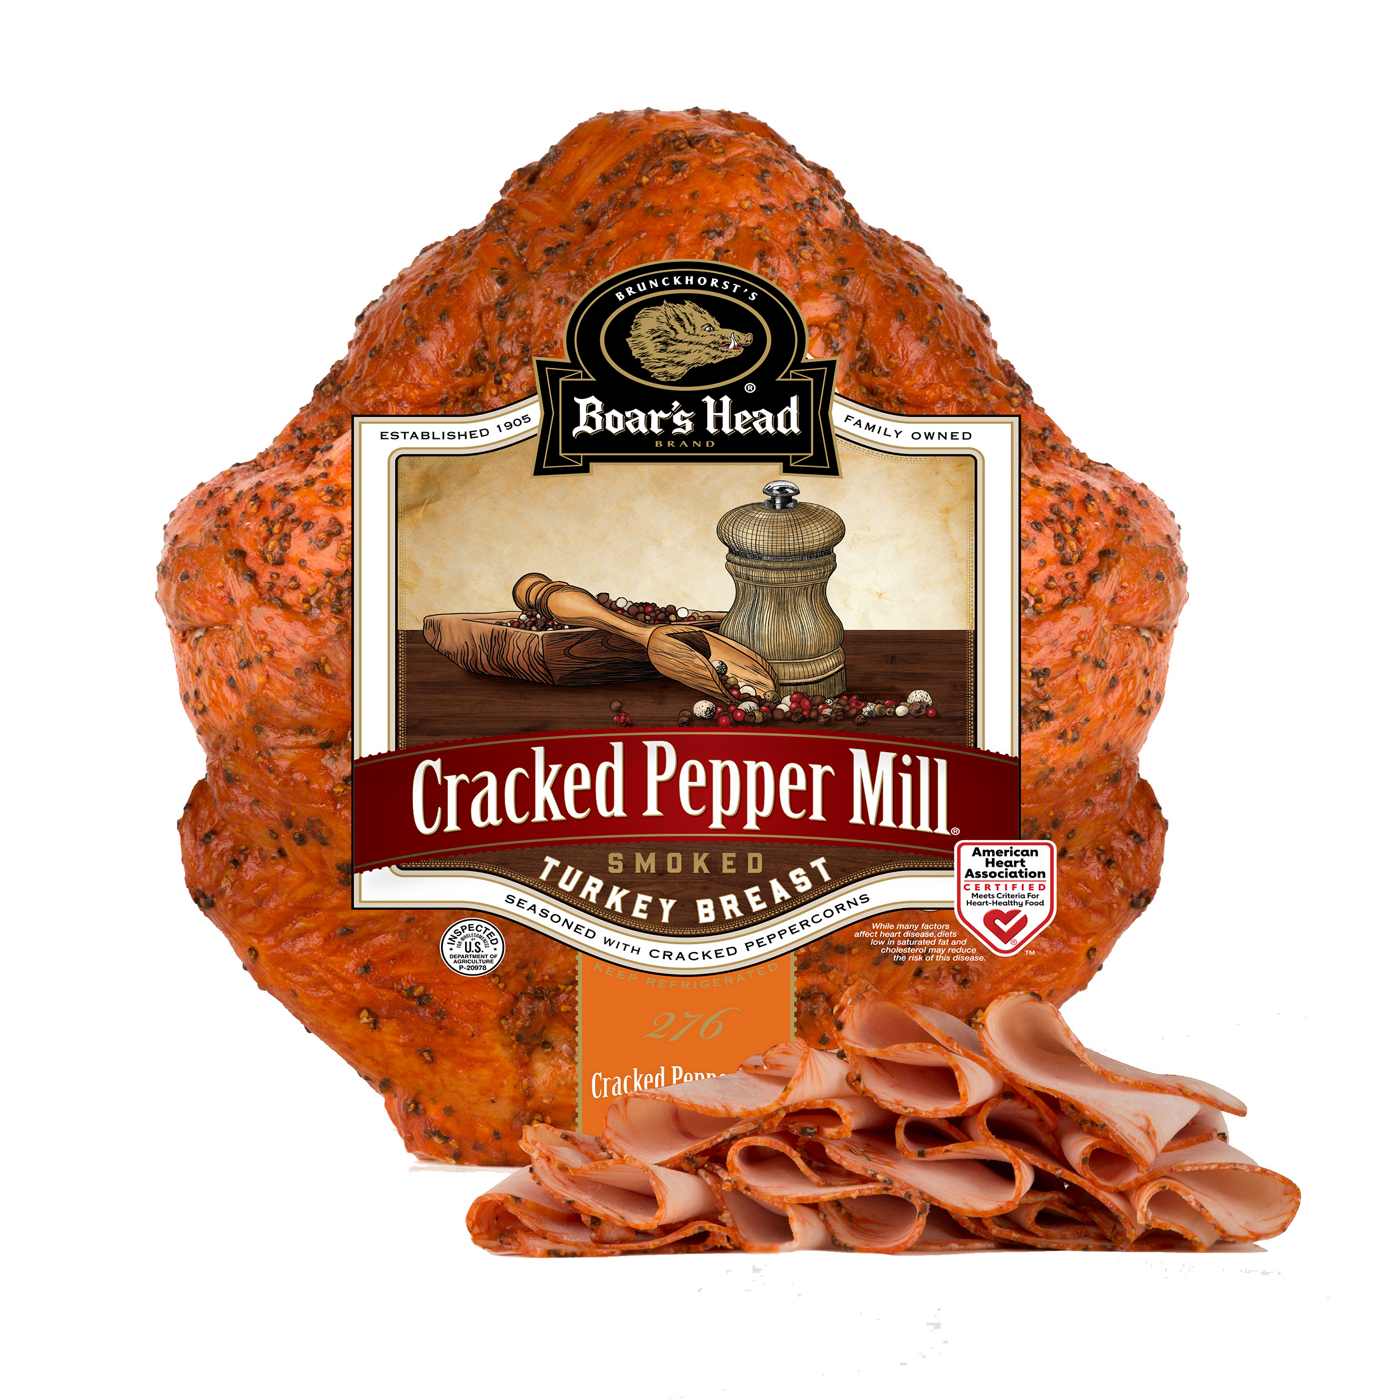 Boar's Head Cracked Pepper Mill Smoked Turkey Breast, Custom Sliced; image 2 of 2